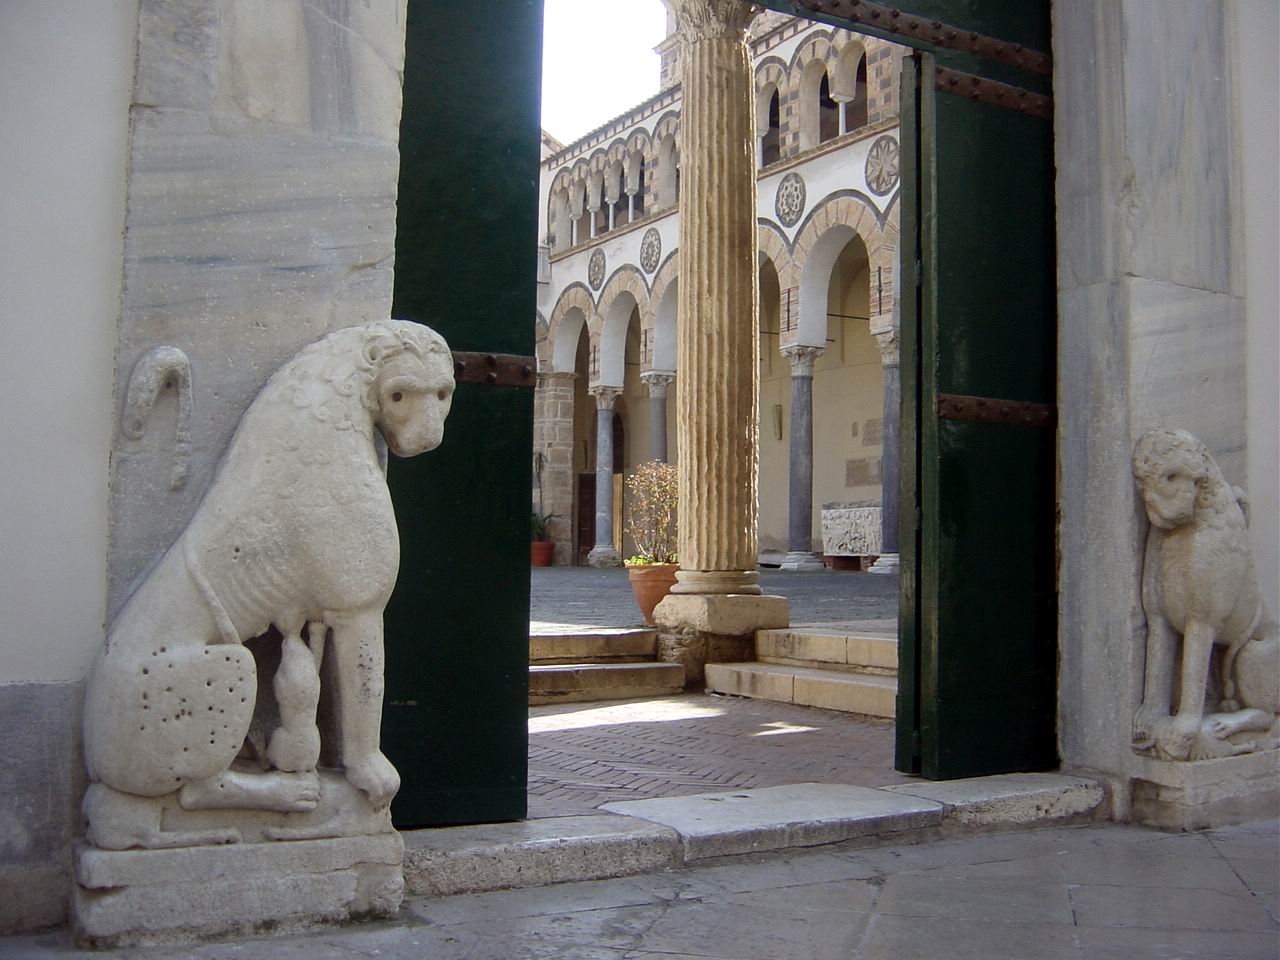 
  
    
      
      
          
Statua Leoni Duomo Salerno

    
  
          
